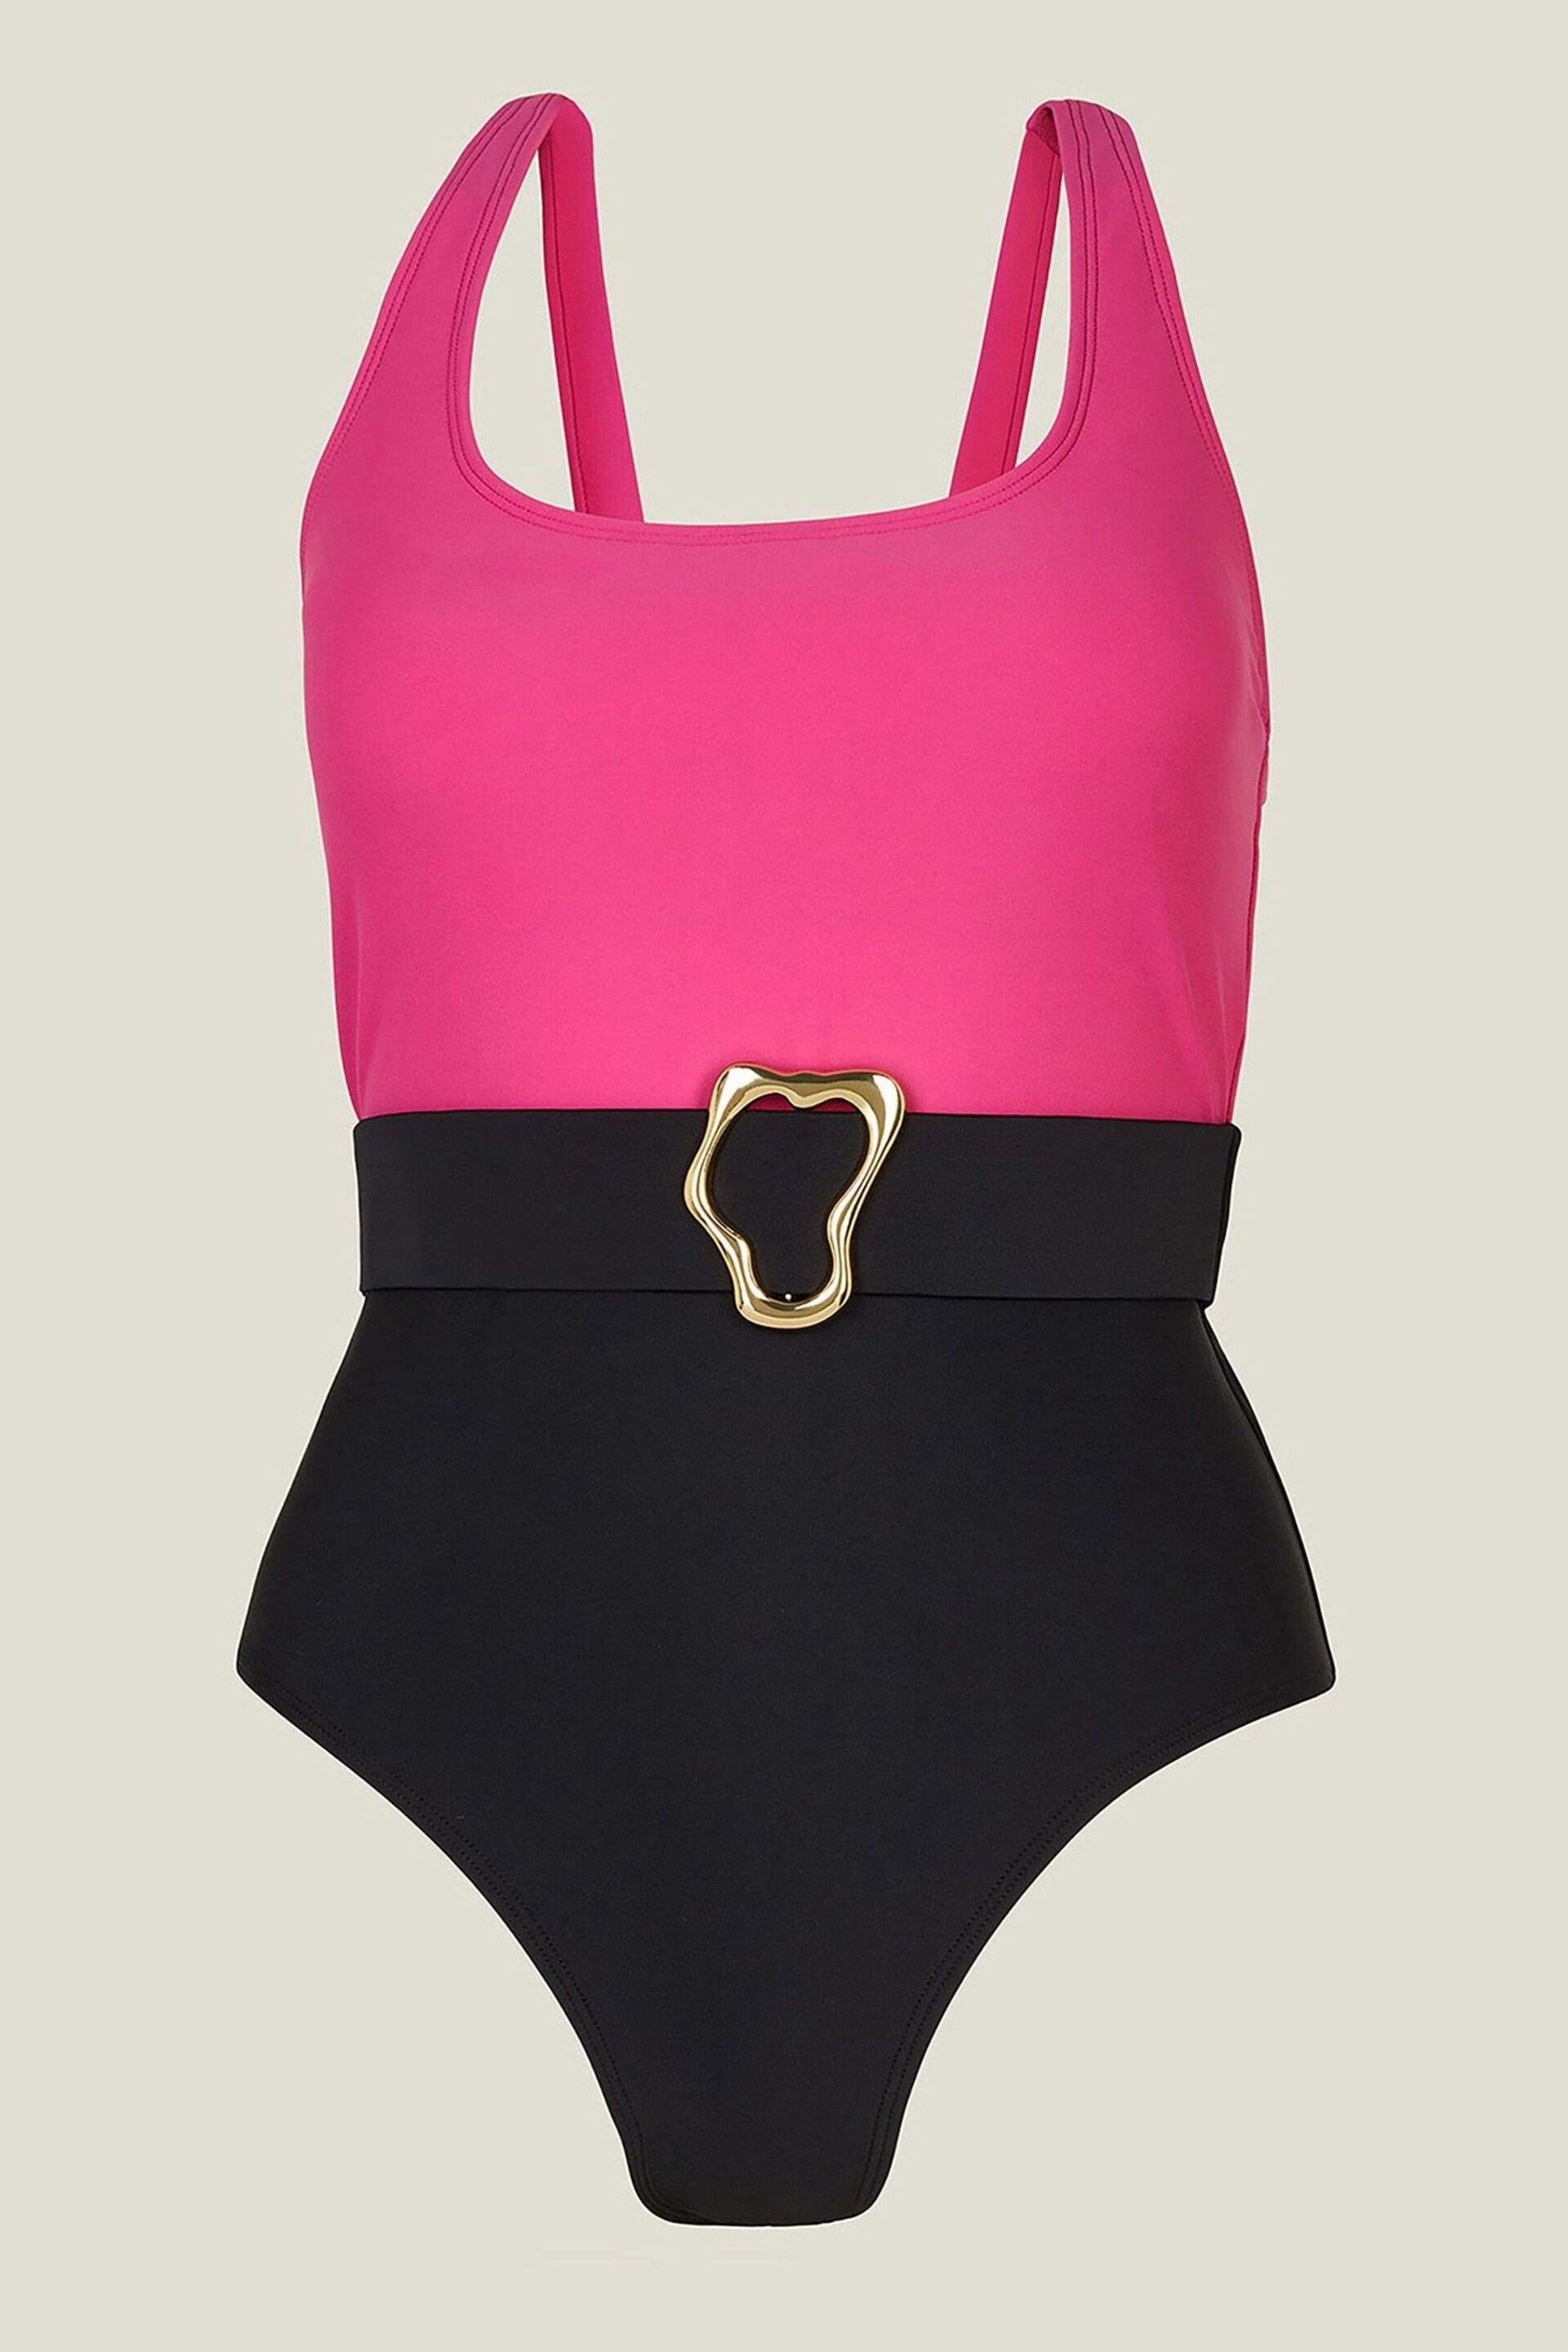 Accessorize Pink Colour Block Belt Swimsuit - Image 4 of 4